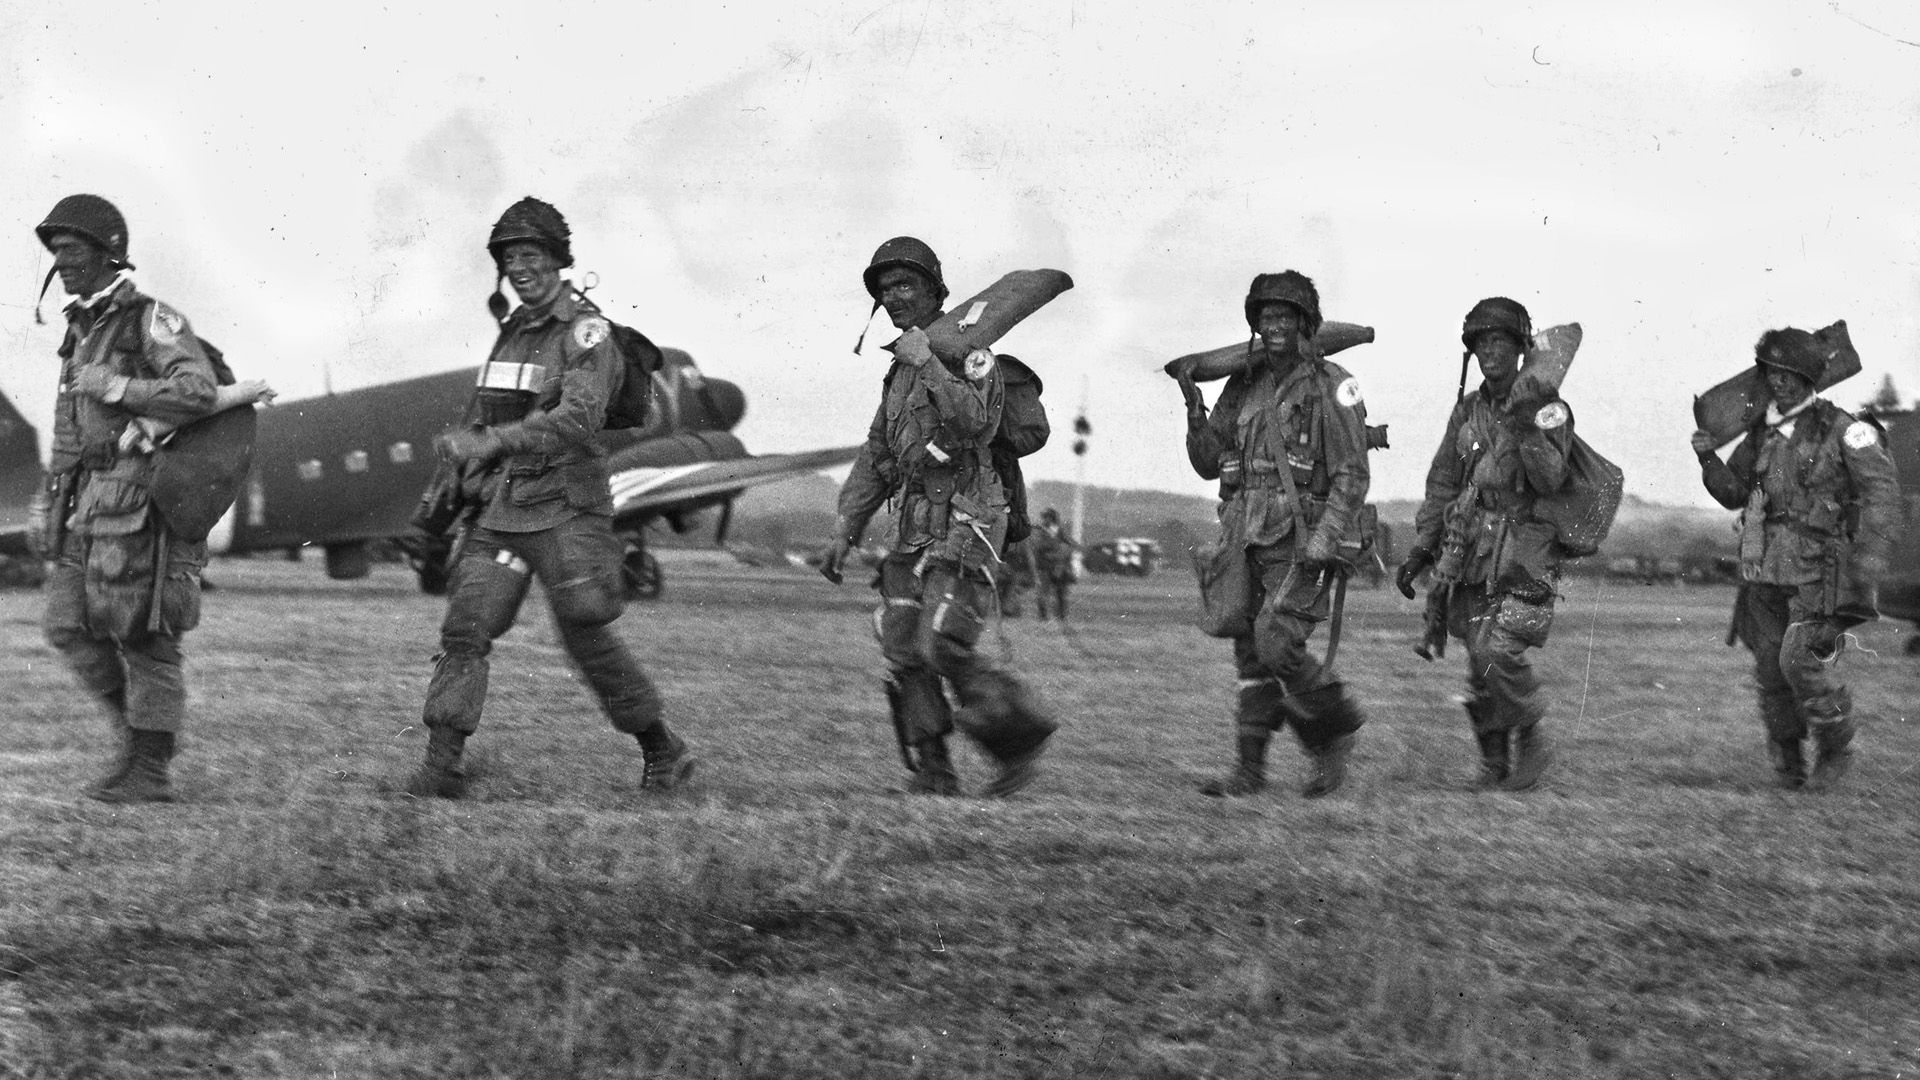 U.S. Paratrooper (World War II) 